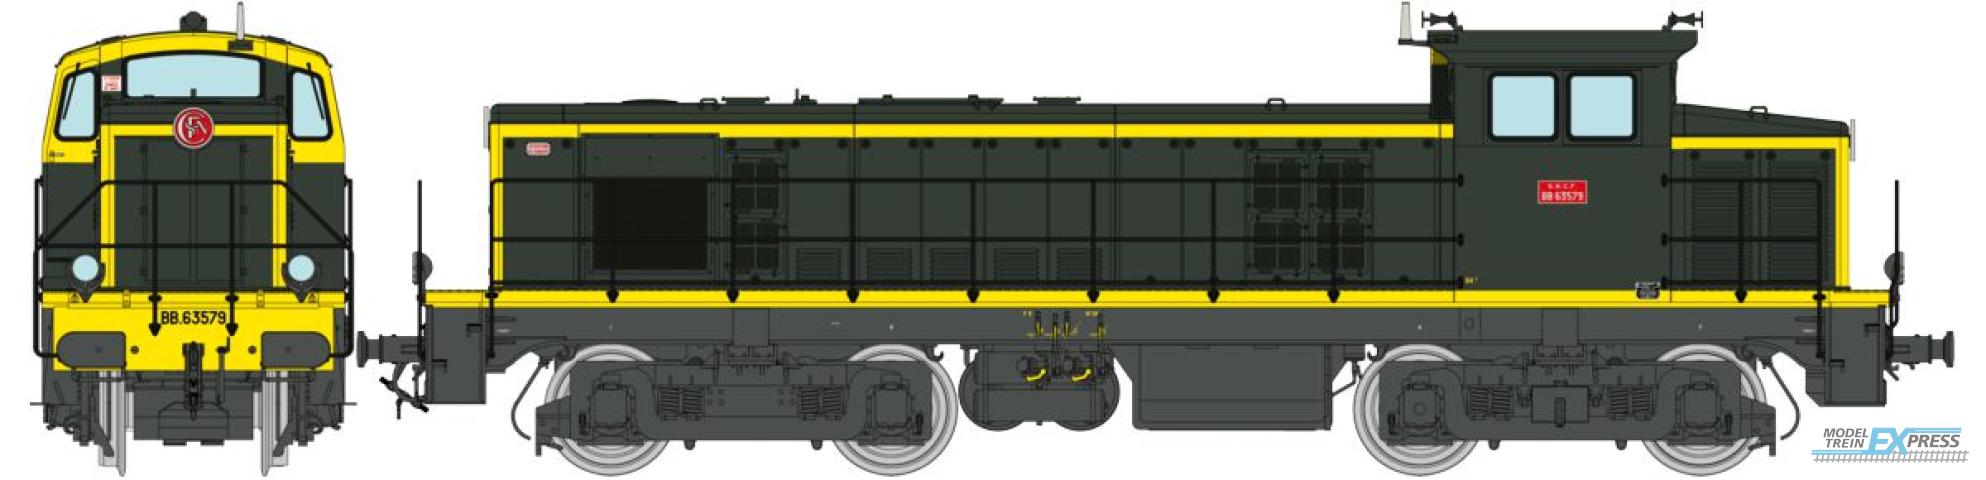 REE models JM-009S Diesel Locomotive BB 63579 green/yellow 401 grey frame, Era IV - DCC SOUND